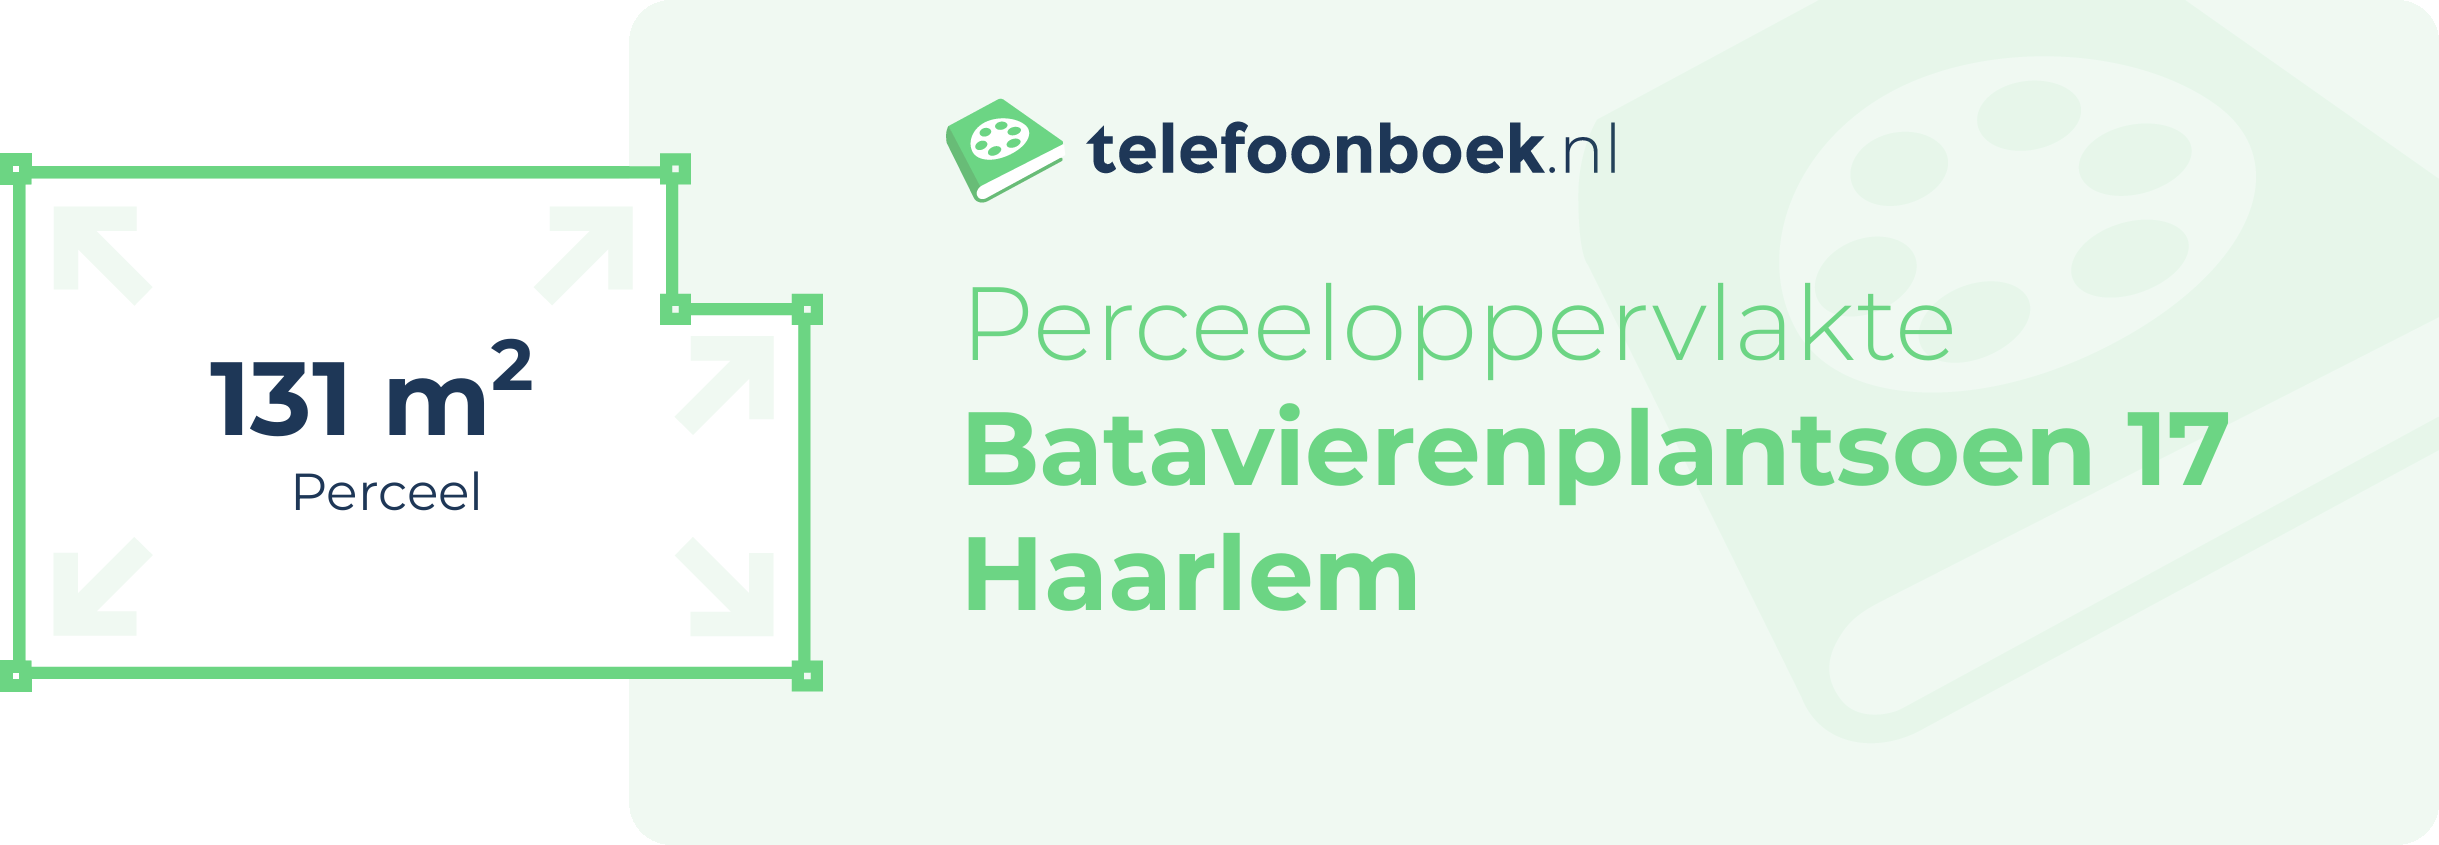 Perceeloppervlakte Batavierenplantsoen 17 Haarlem